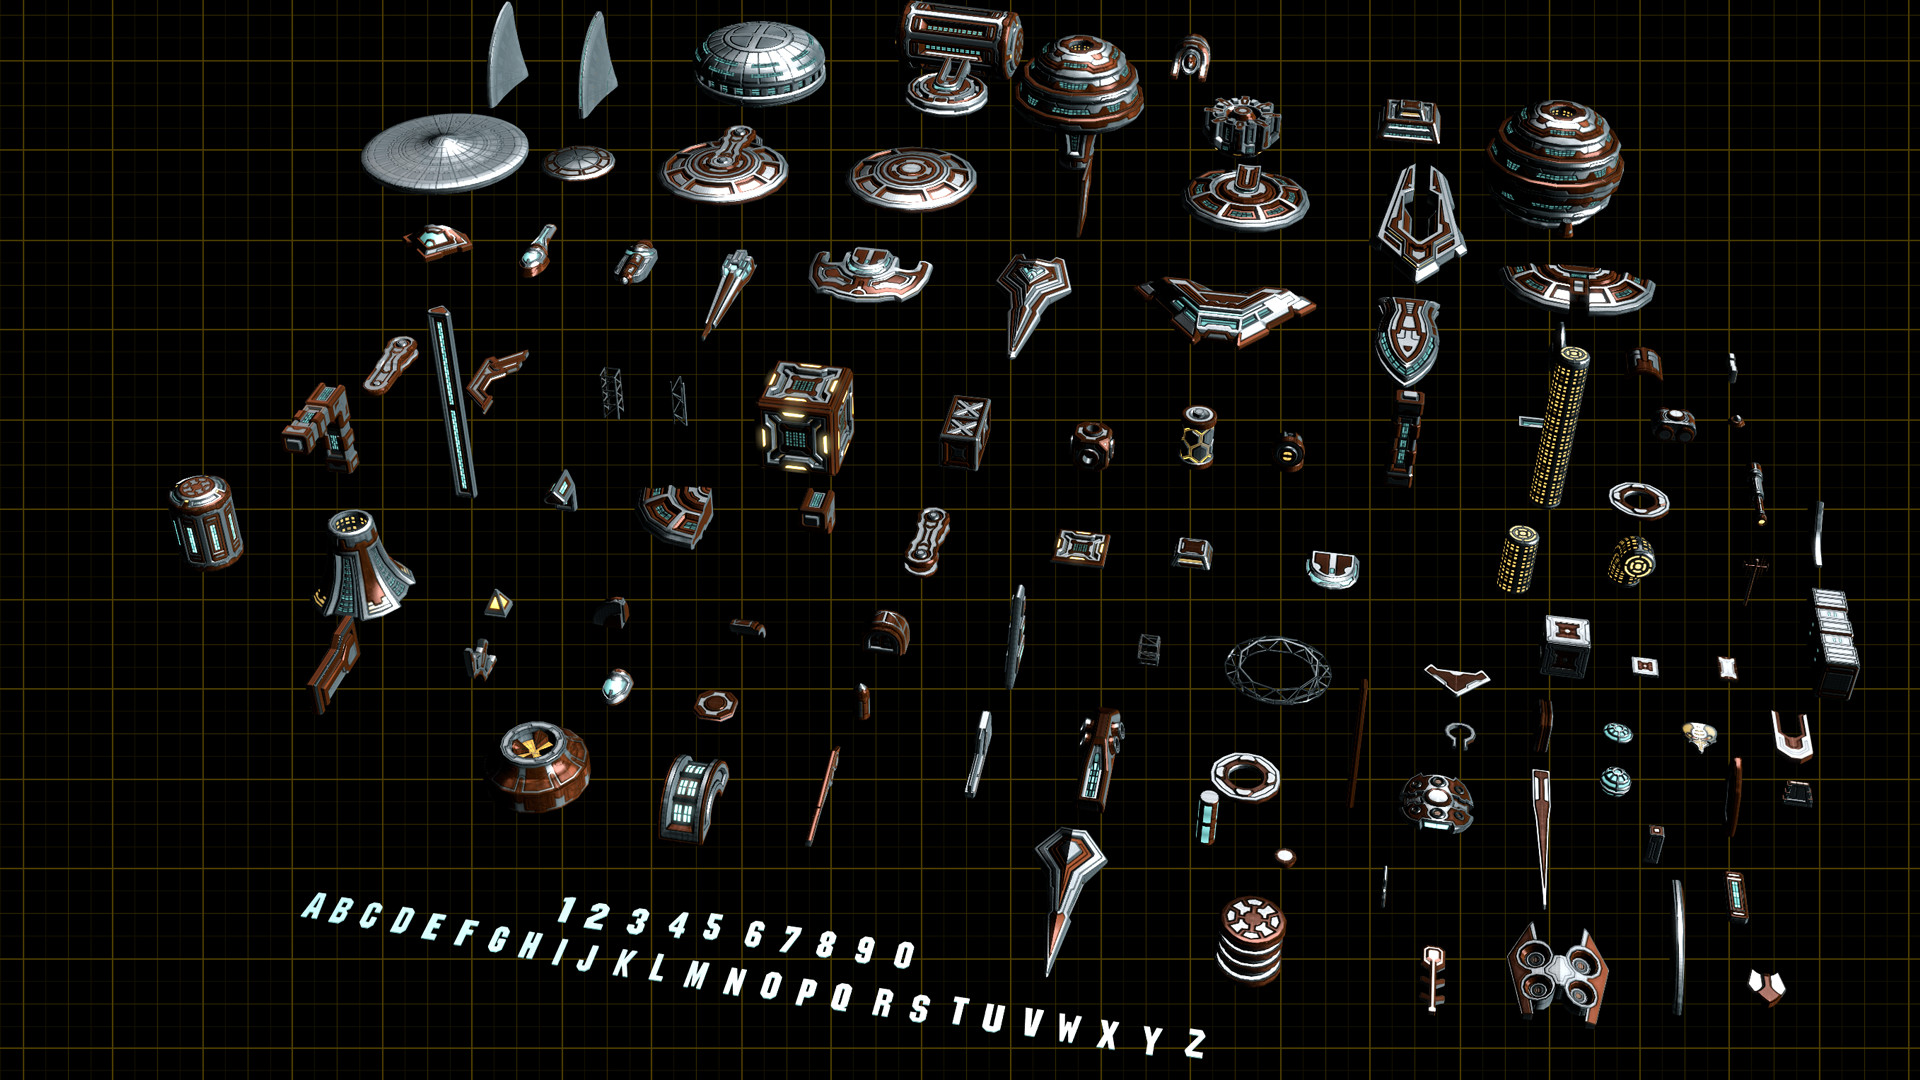 Galactic Civilizations III - Builders Kit DLC Featured Screenshot #1